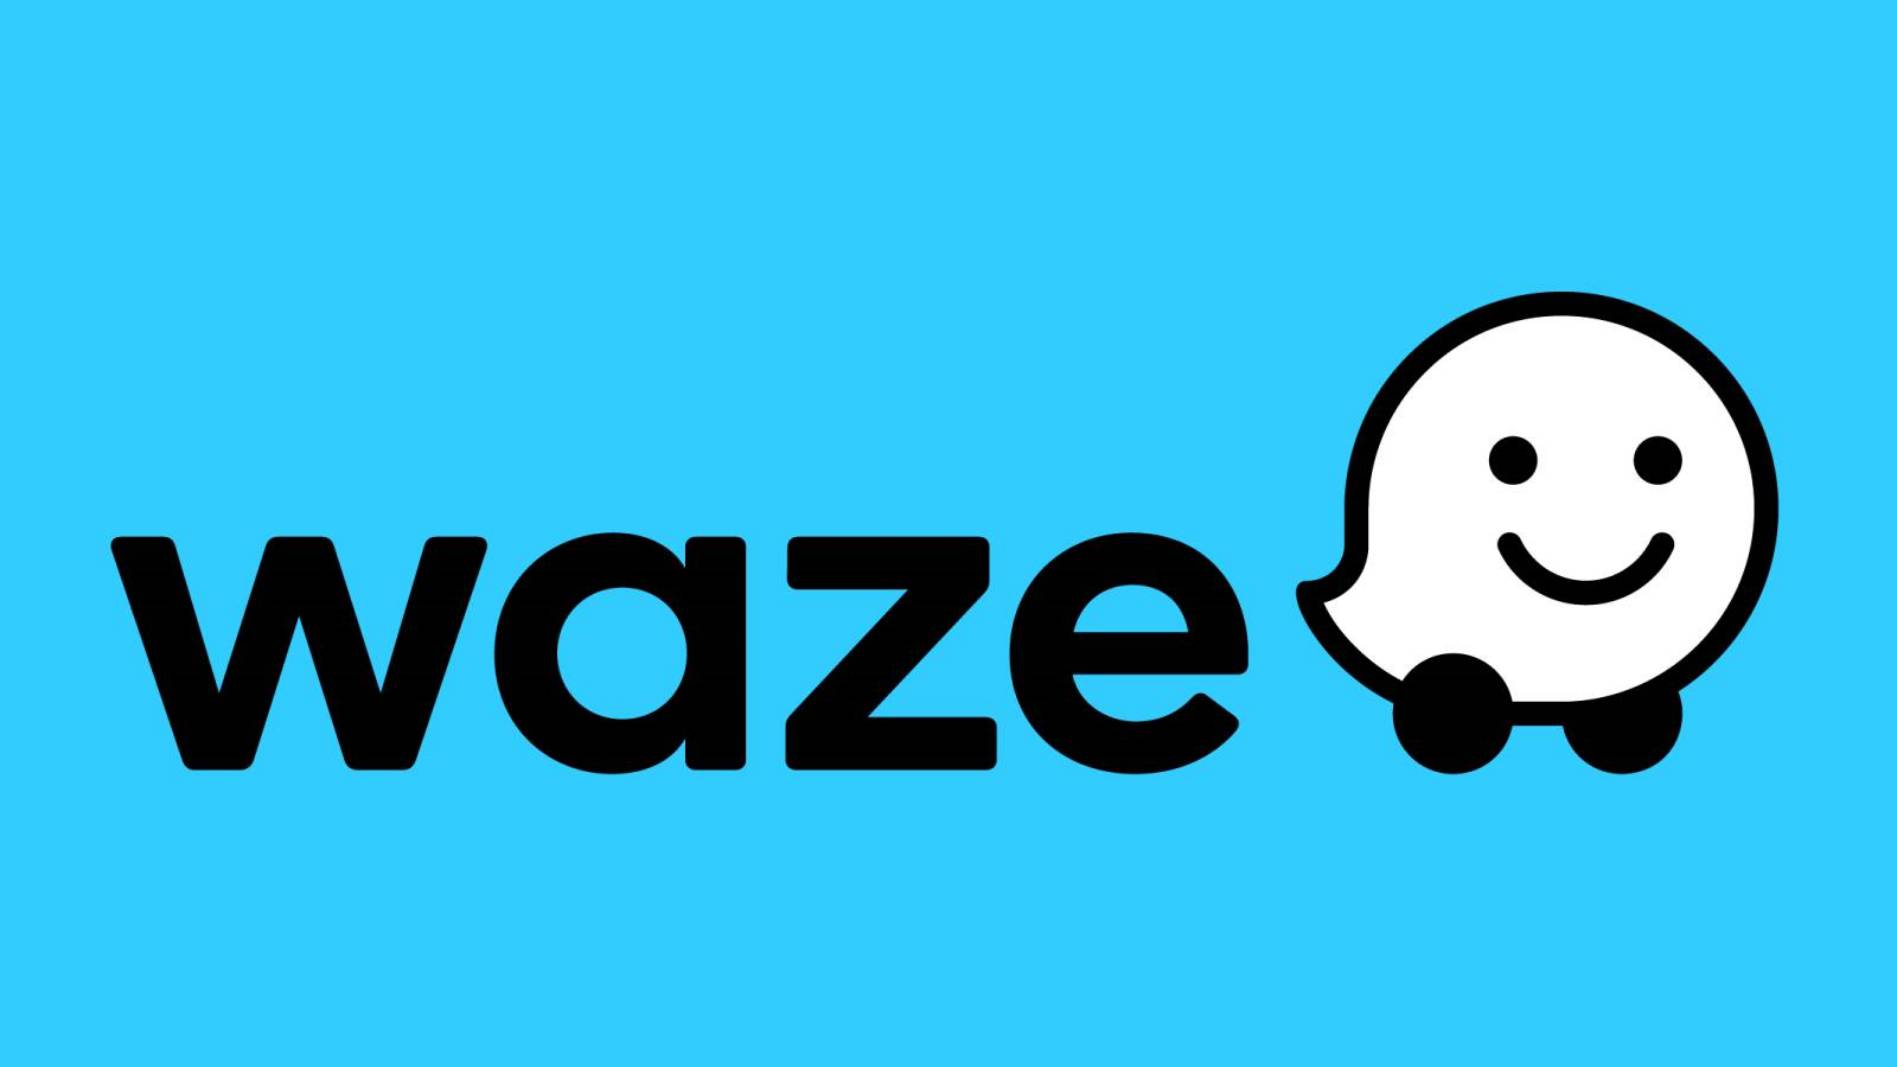 Waze va Incepe sa Afiseze Doua Noi Alerte pe iPhone si Android